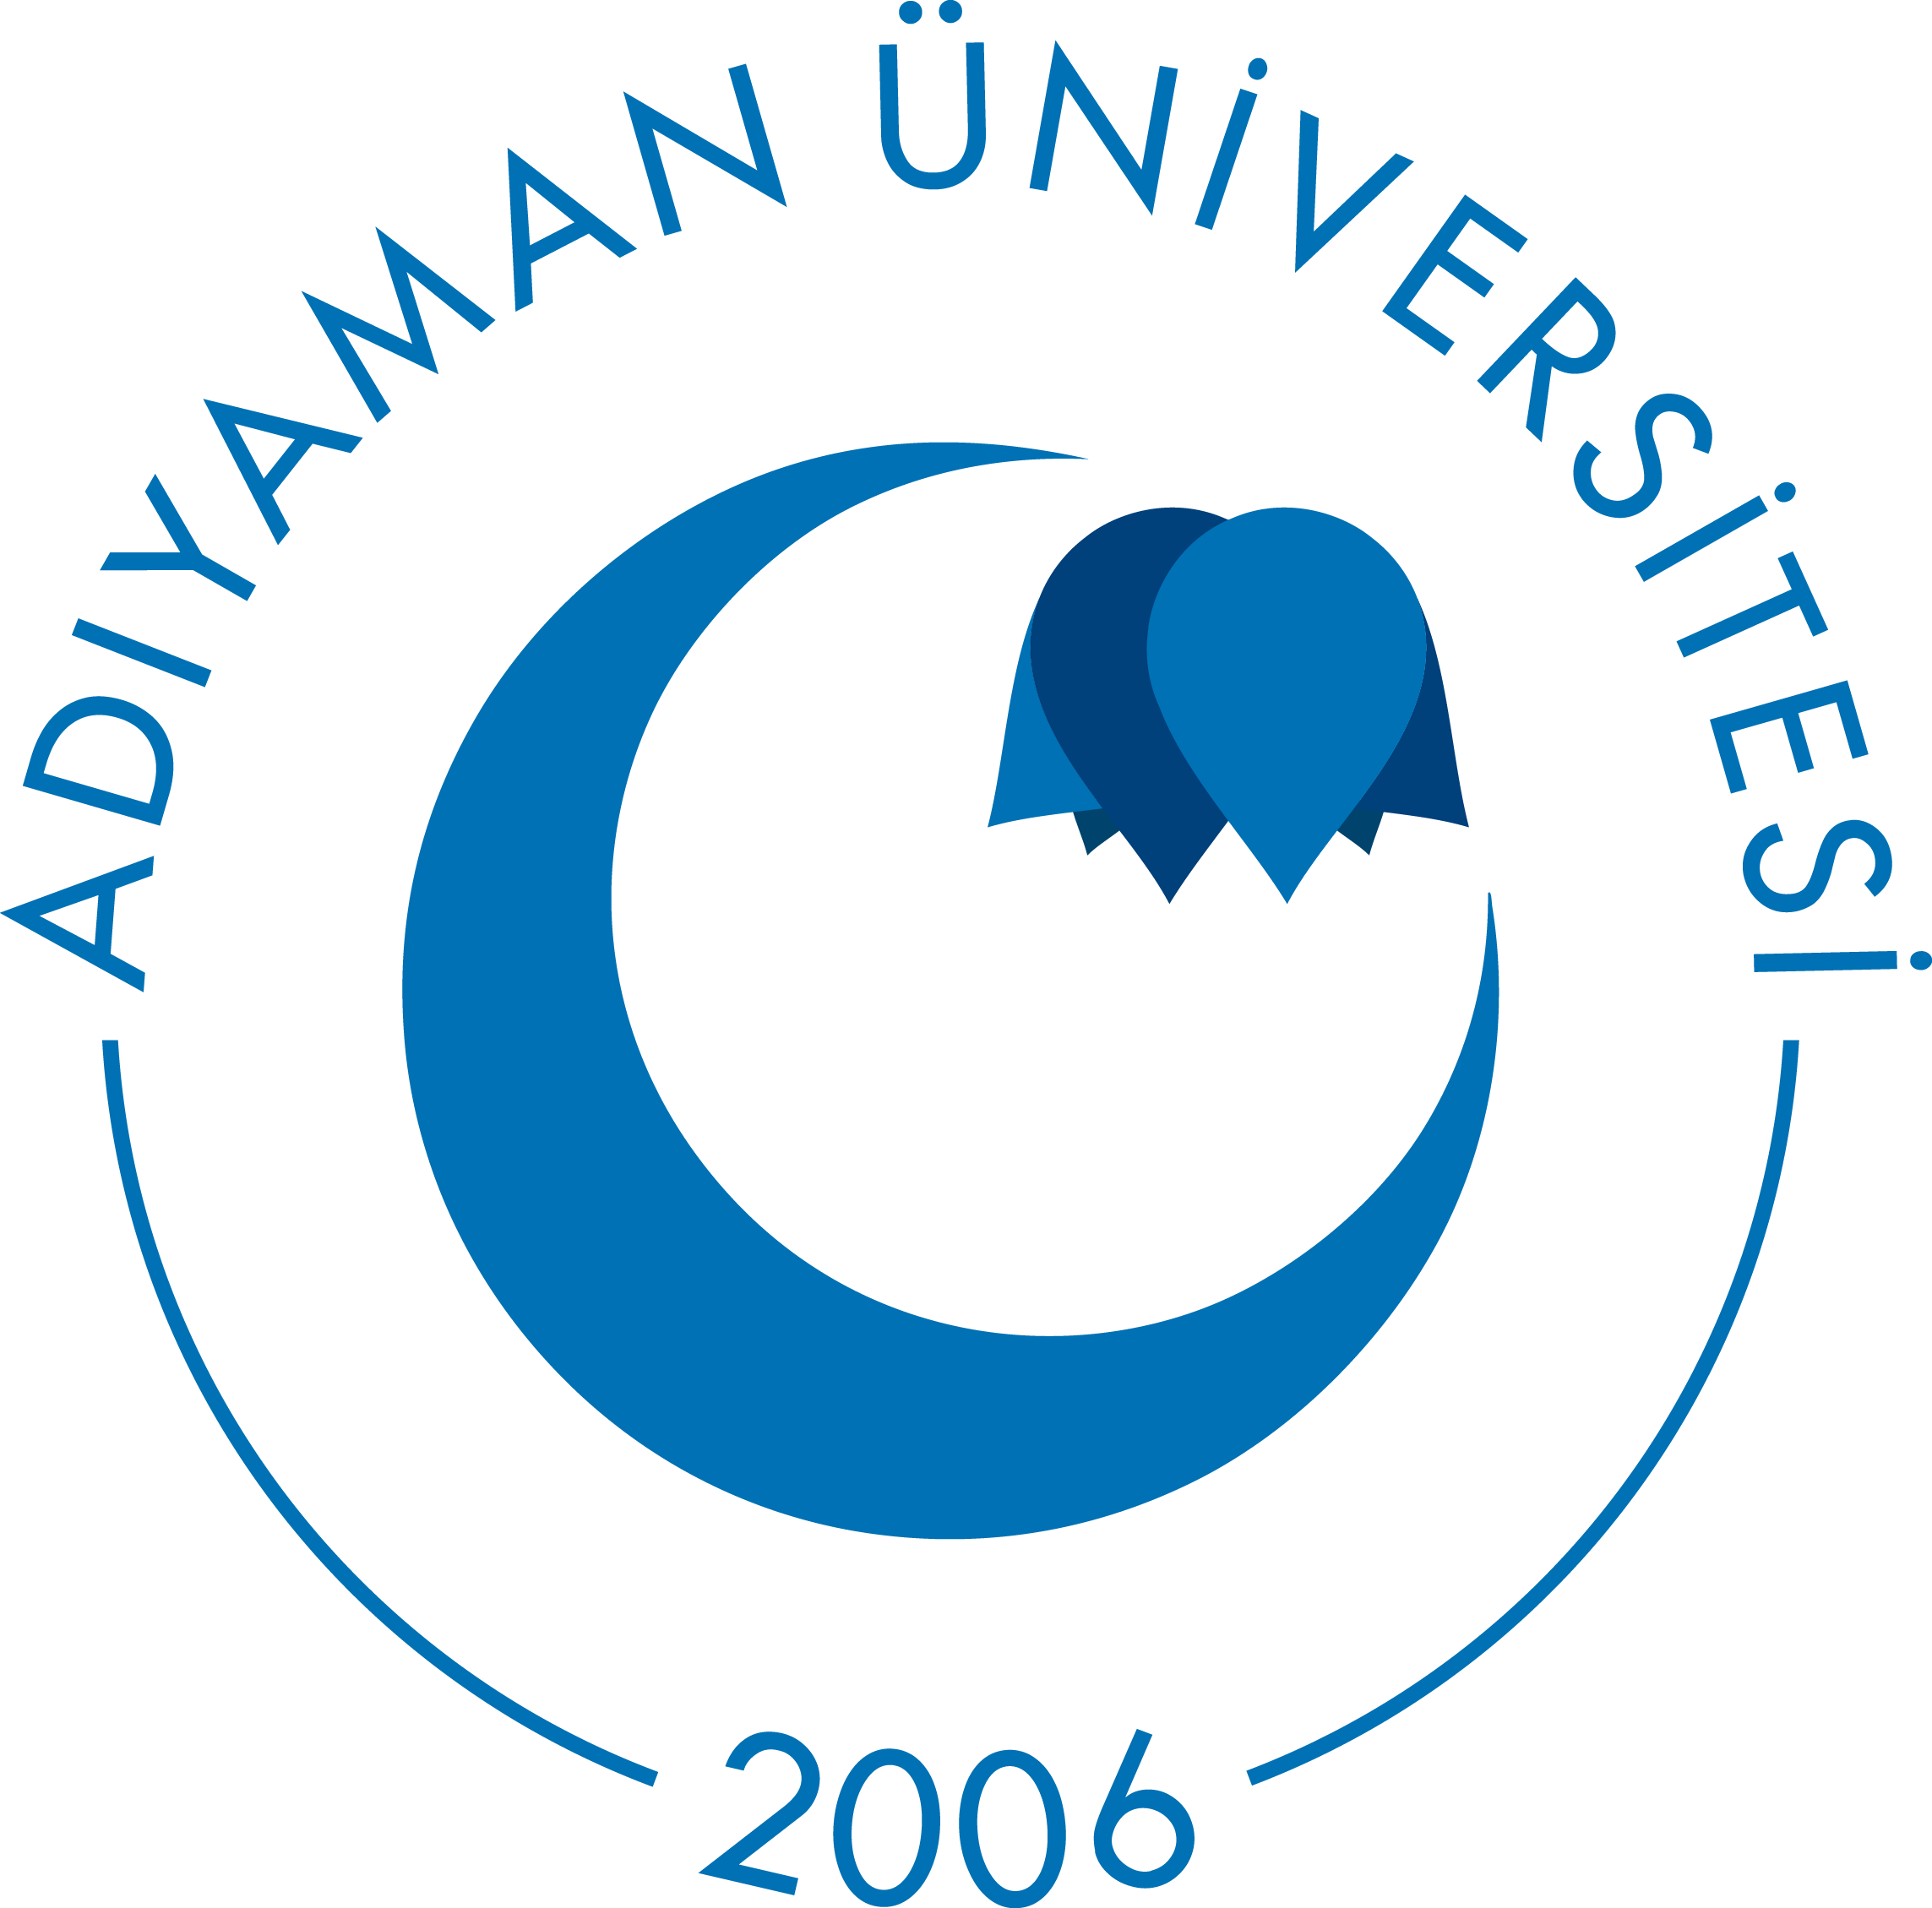 Ad?yaman Üniversitesi Logo - Amblem [adiyaman.edu.tr]